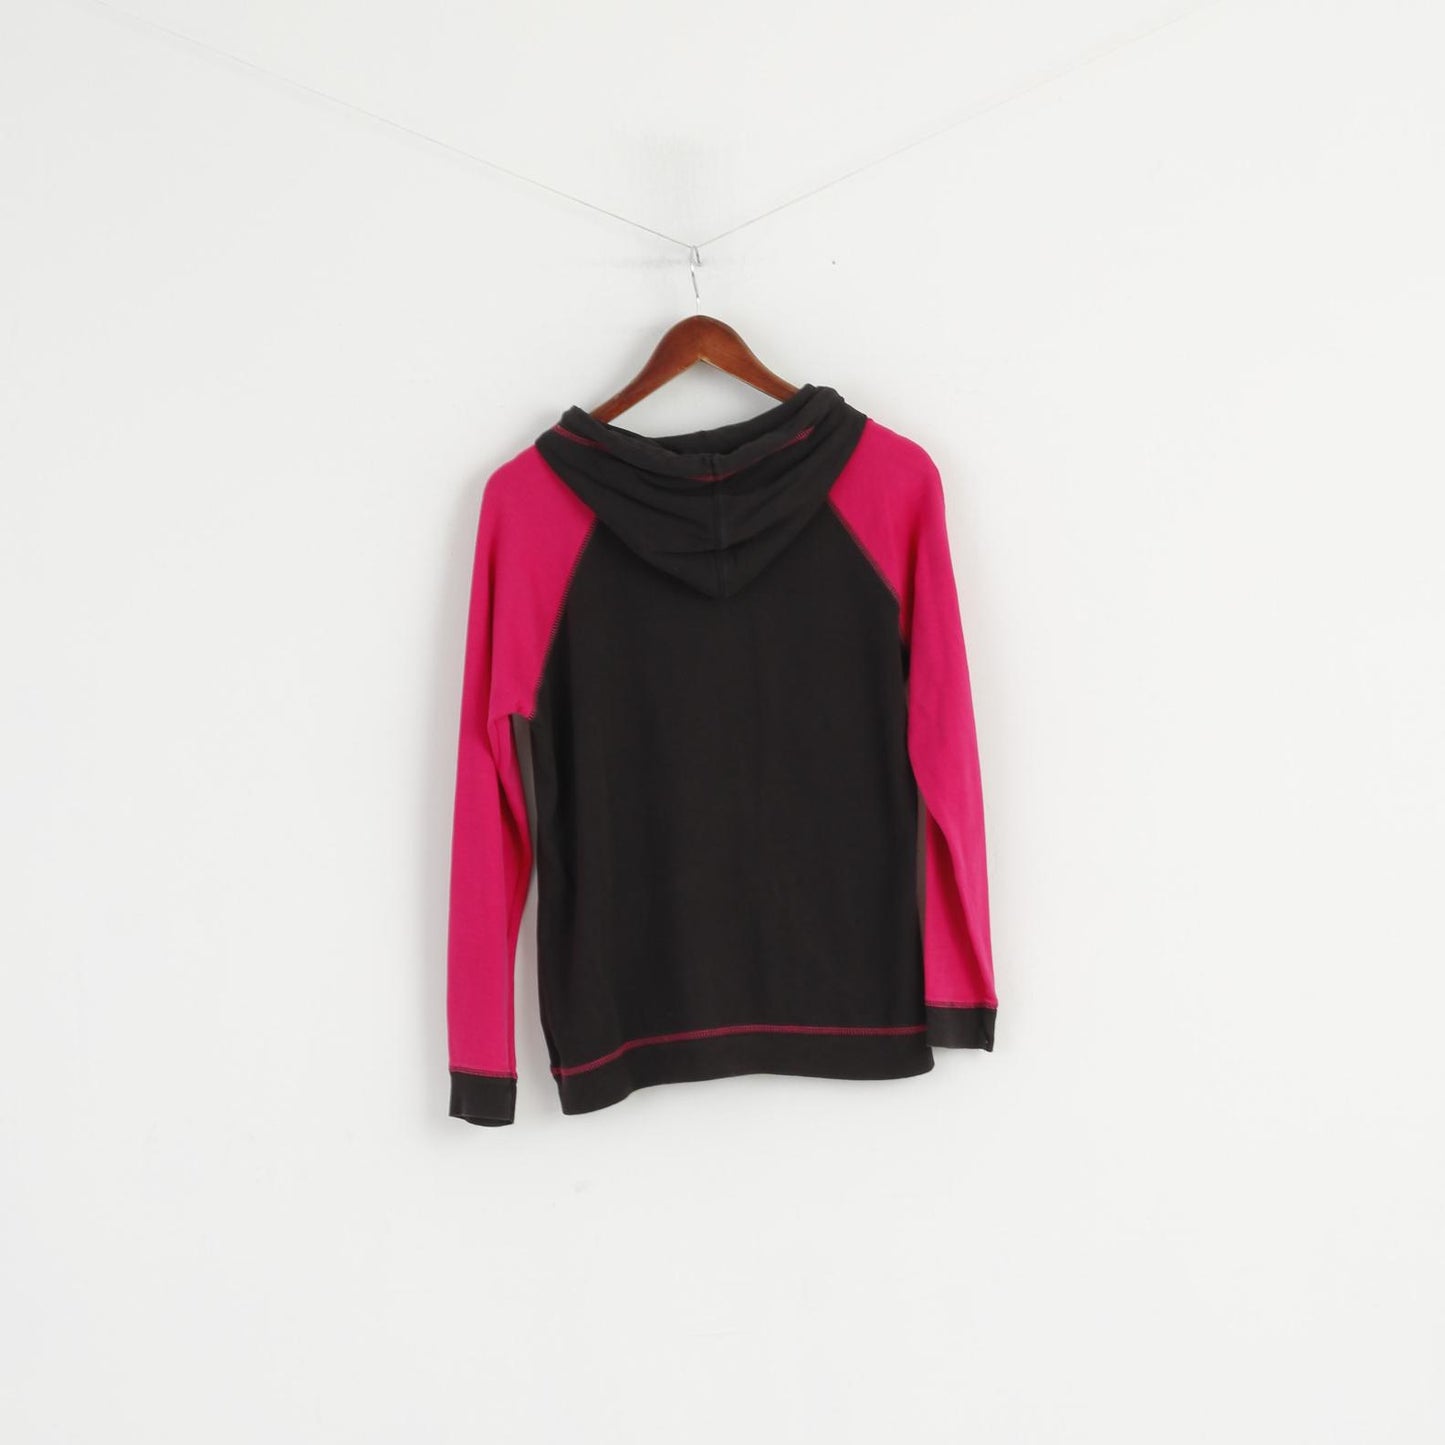 Everlast Women 14 M Sweatshirt Black Pink Cotton Hooded Kangaroo Pocket Top